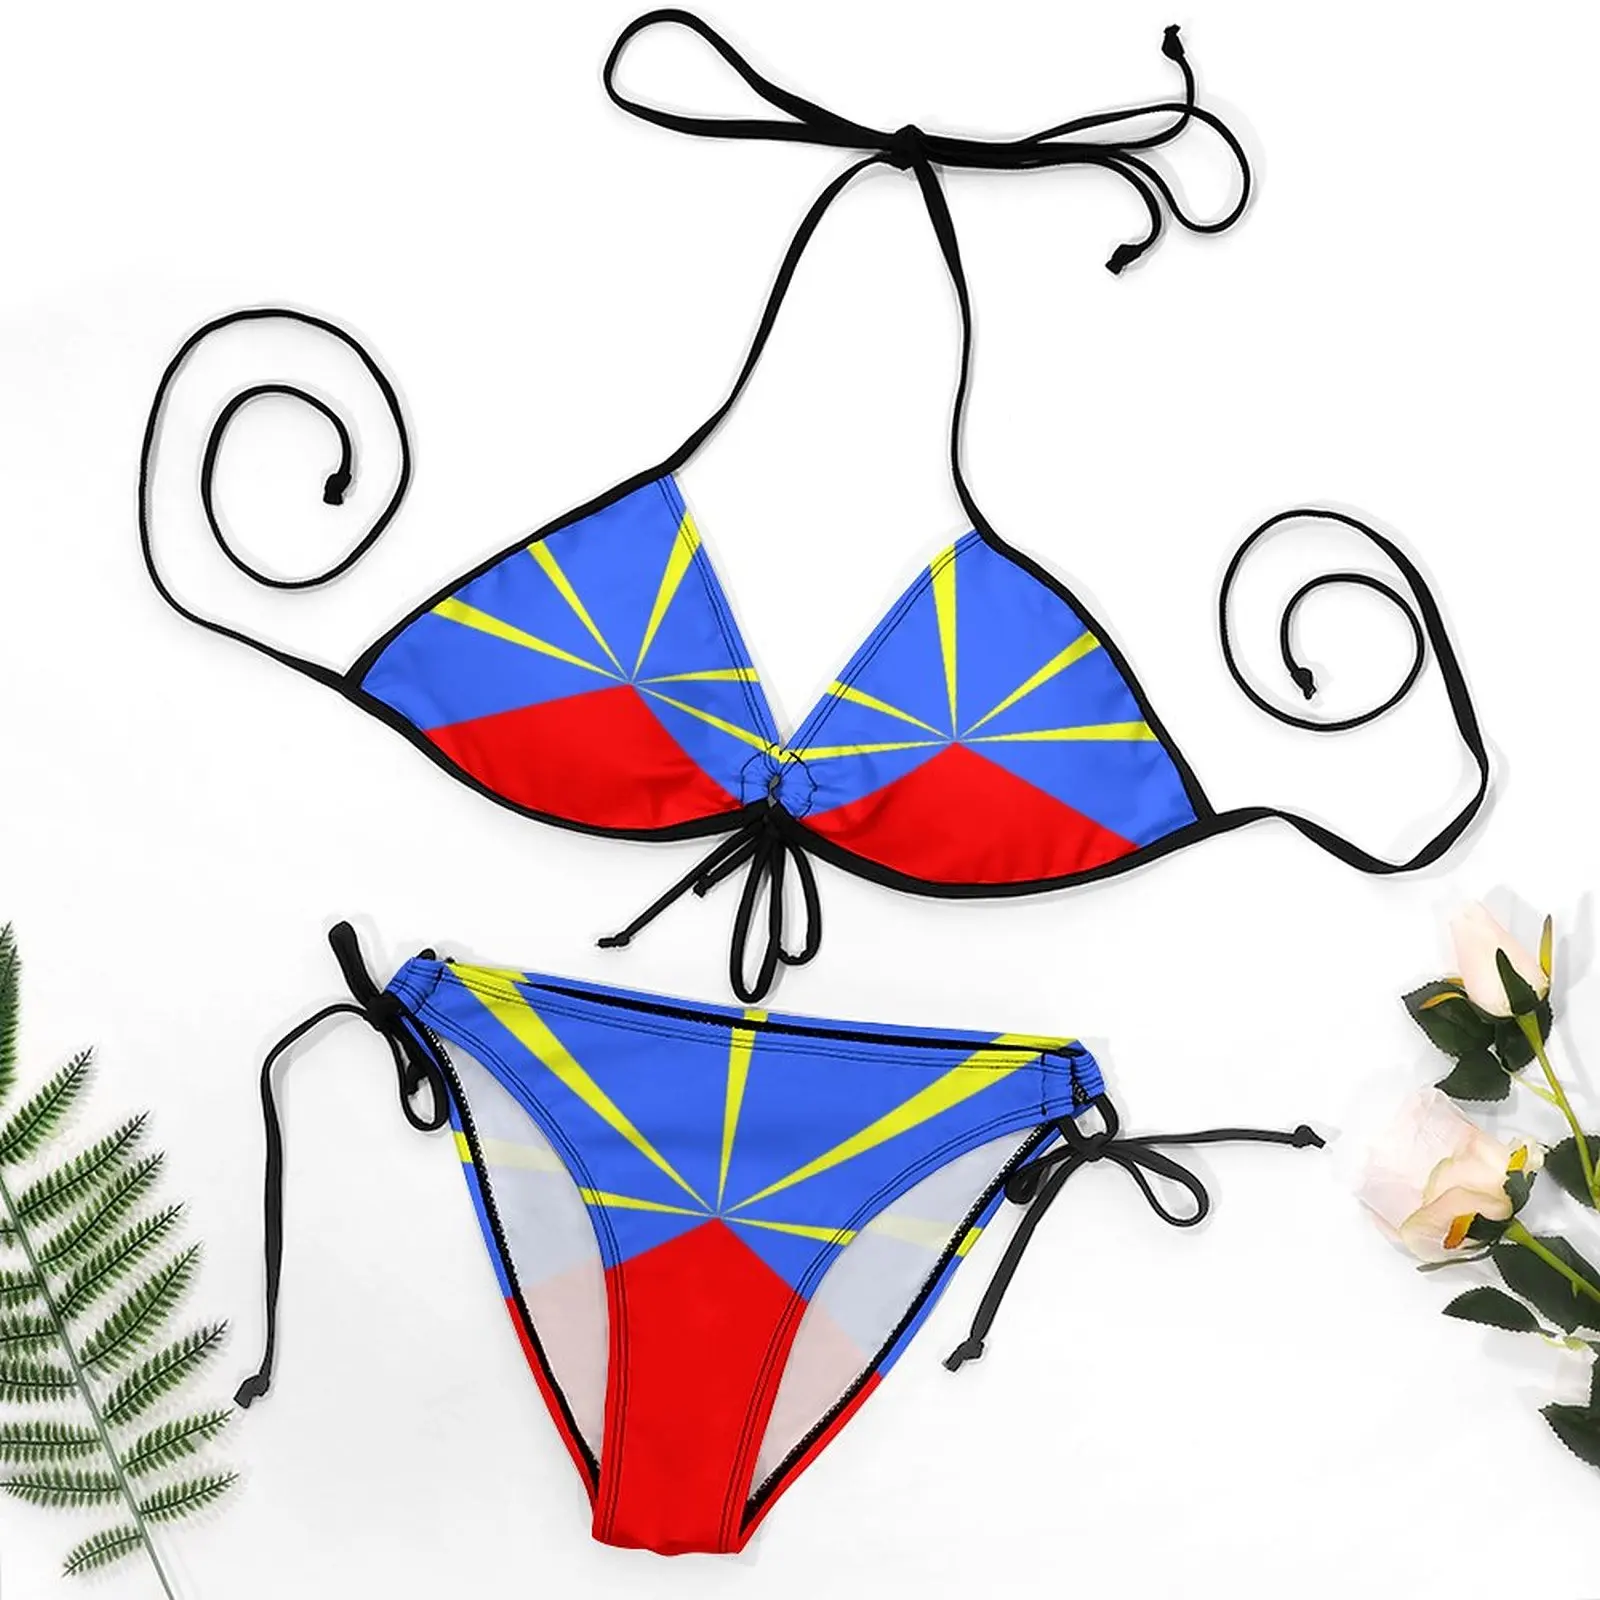 

Creative Sexy Women's Bikinis Reunion Island 974 MagnetHumor Graphic Bikini High Quality Swimsuit Beach